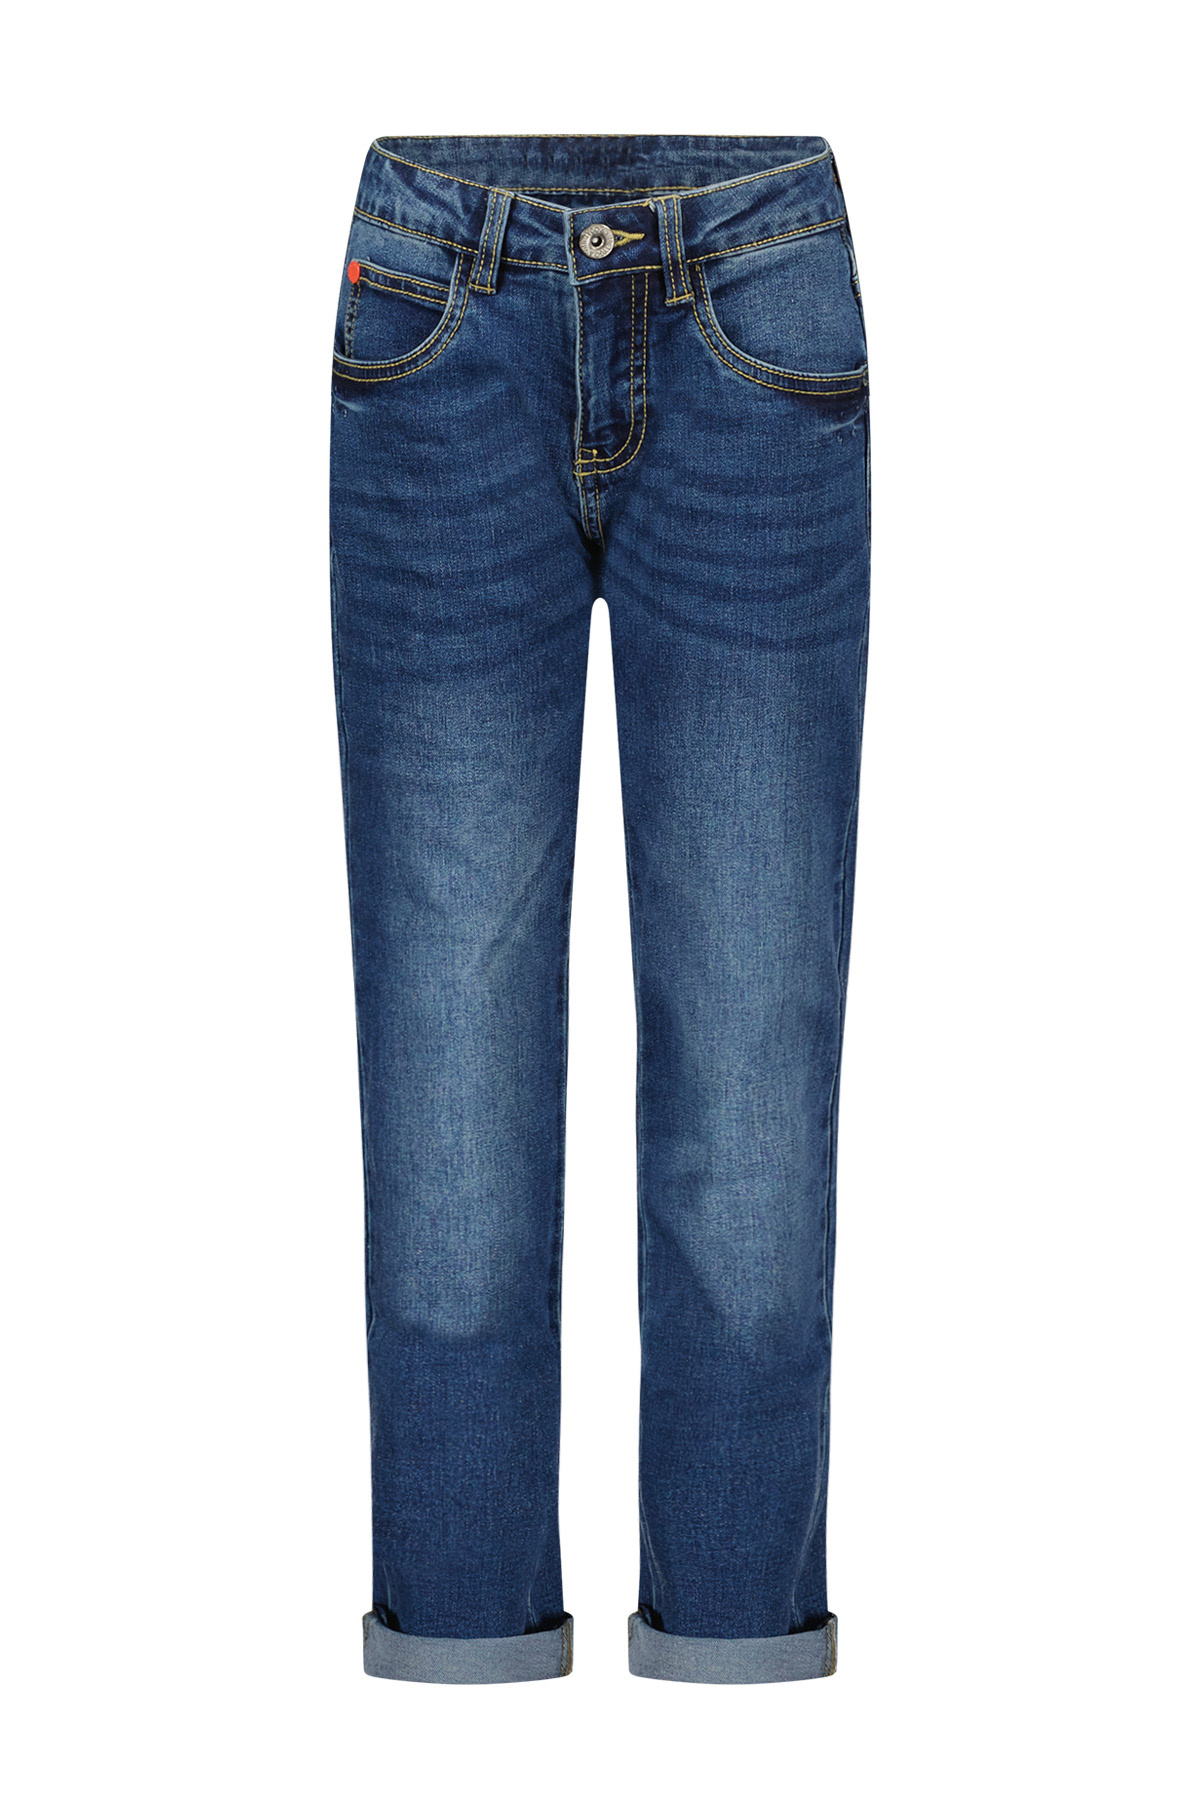 Tygo & Vito Jongens jeans broek straight fit - Boaz - Medium Used